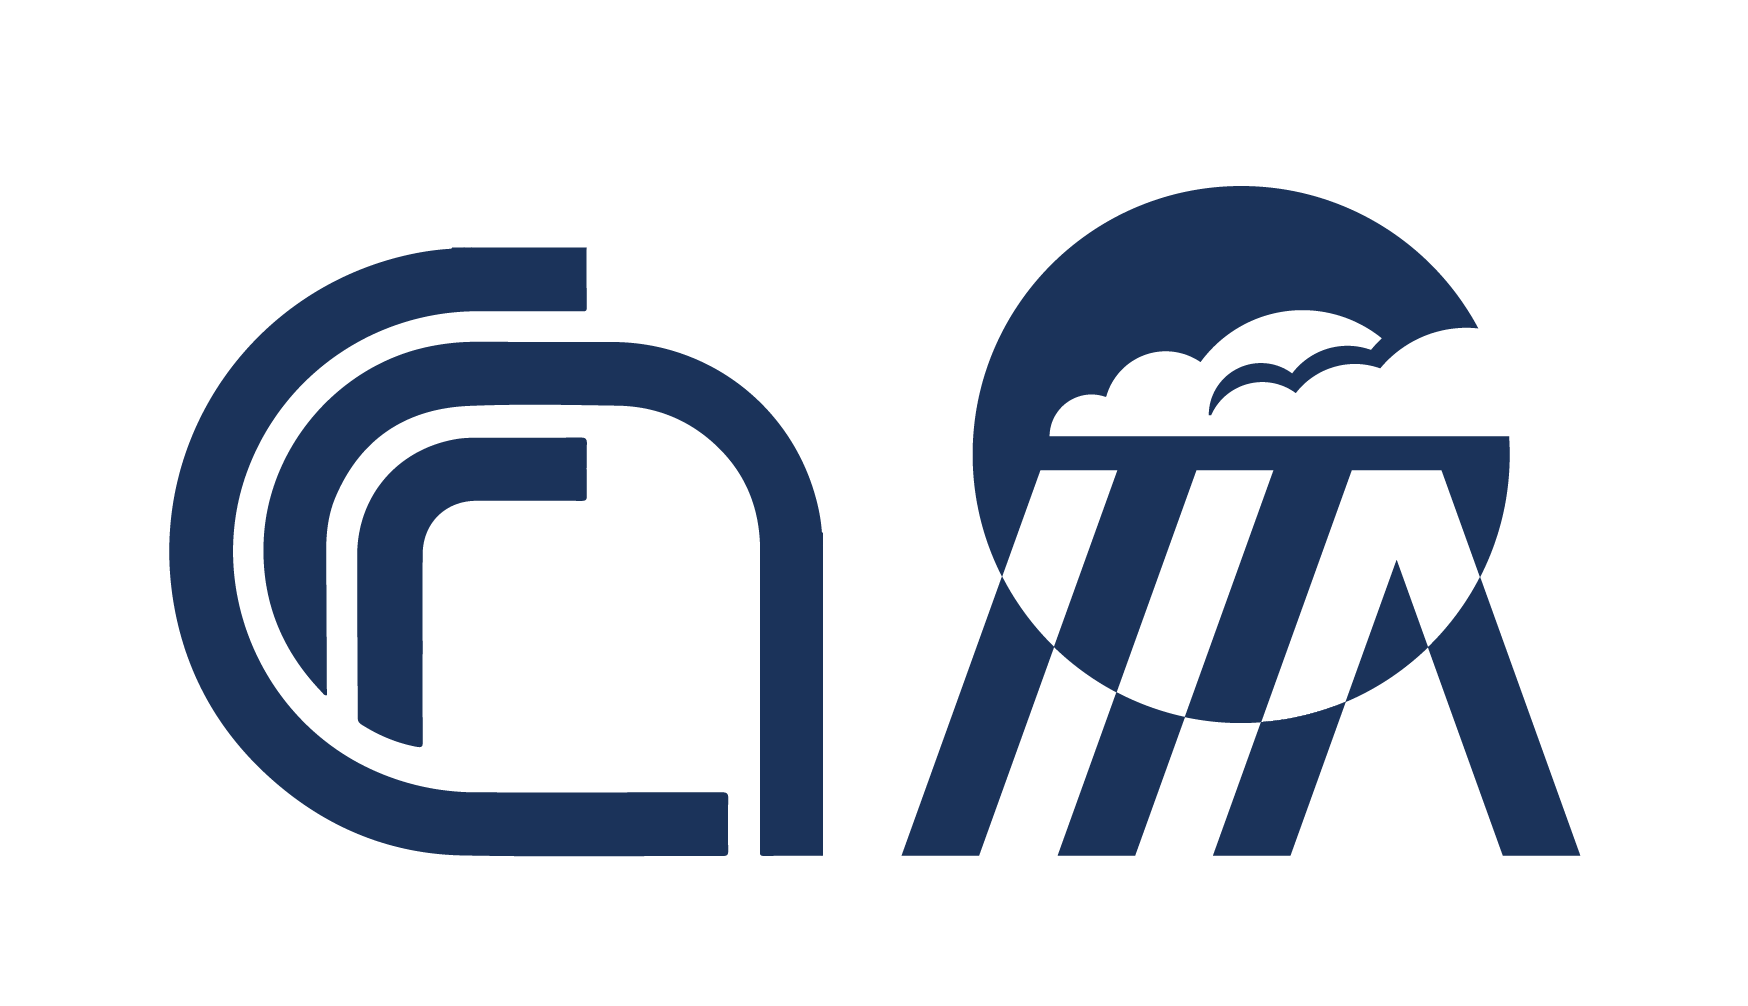 CNR IIA logo